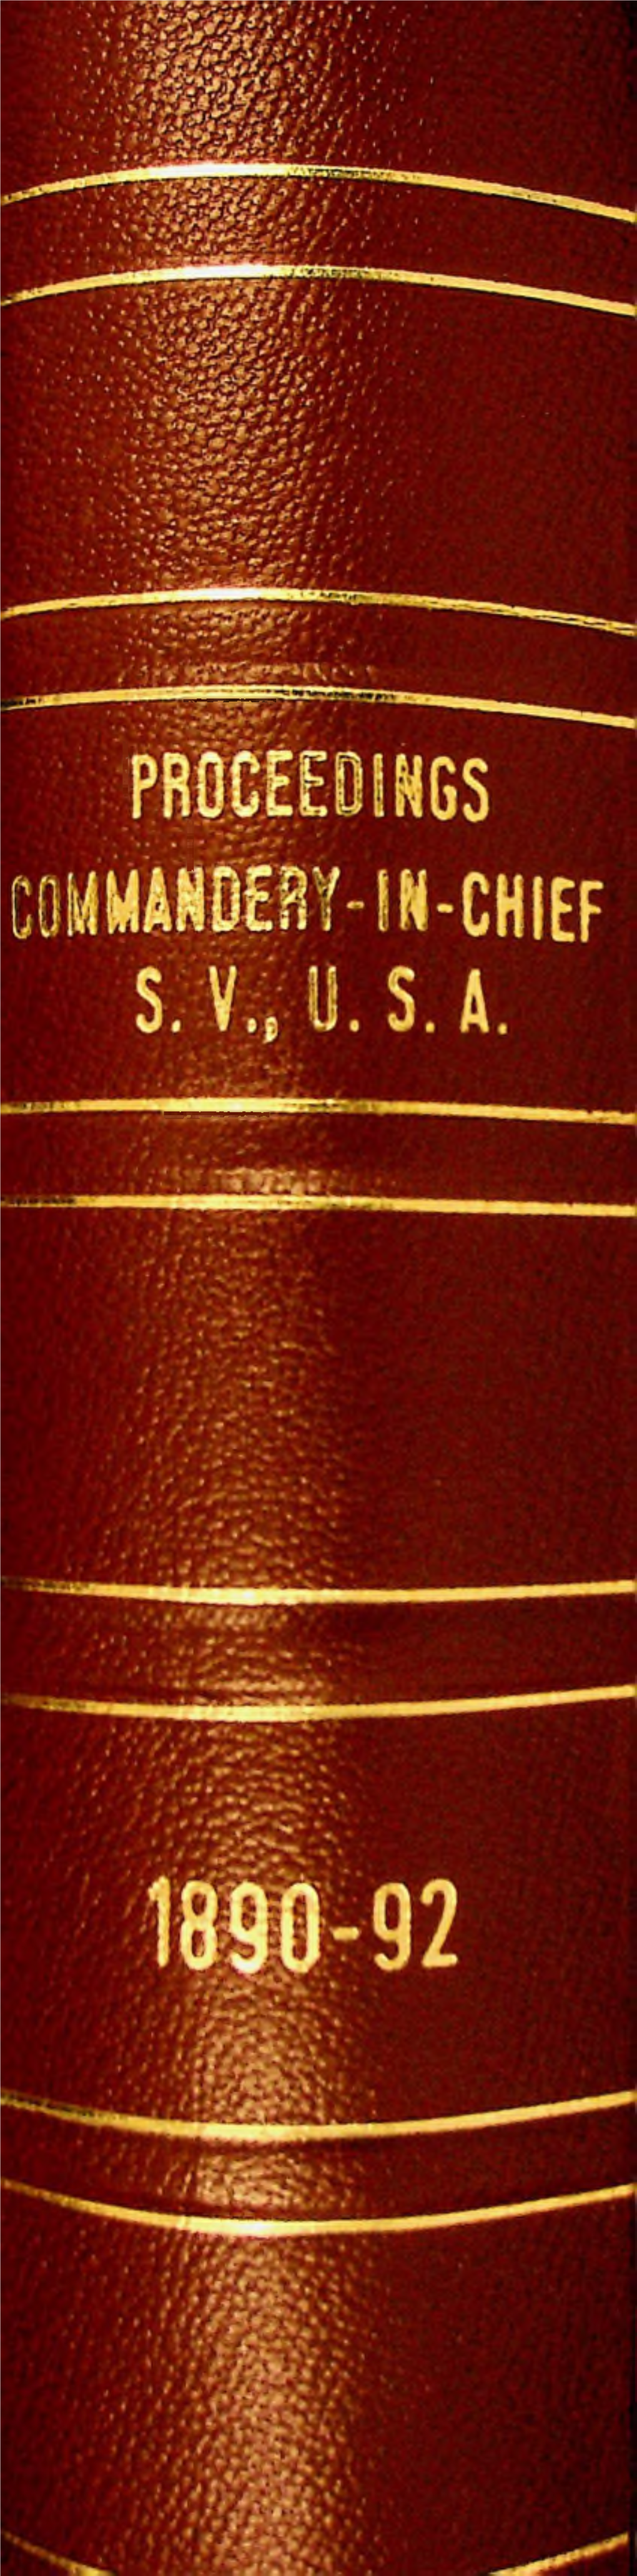 1890 Proceedings